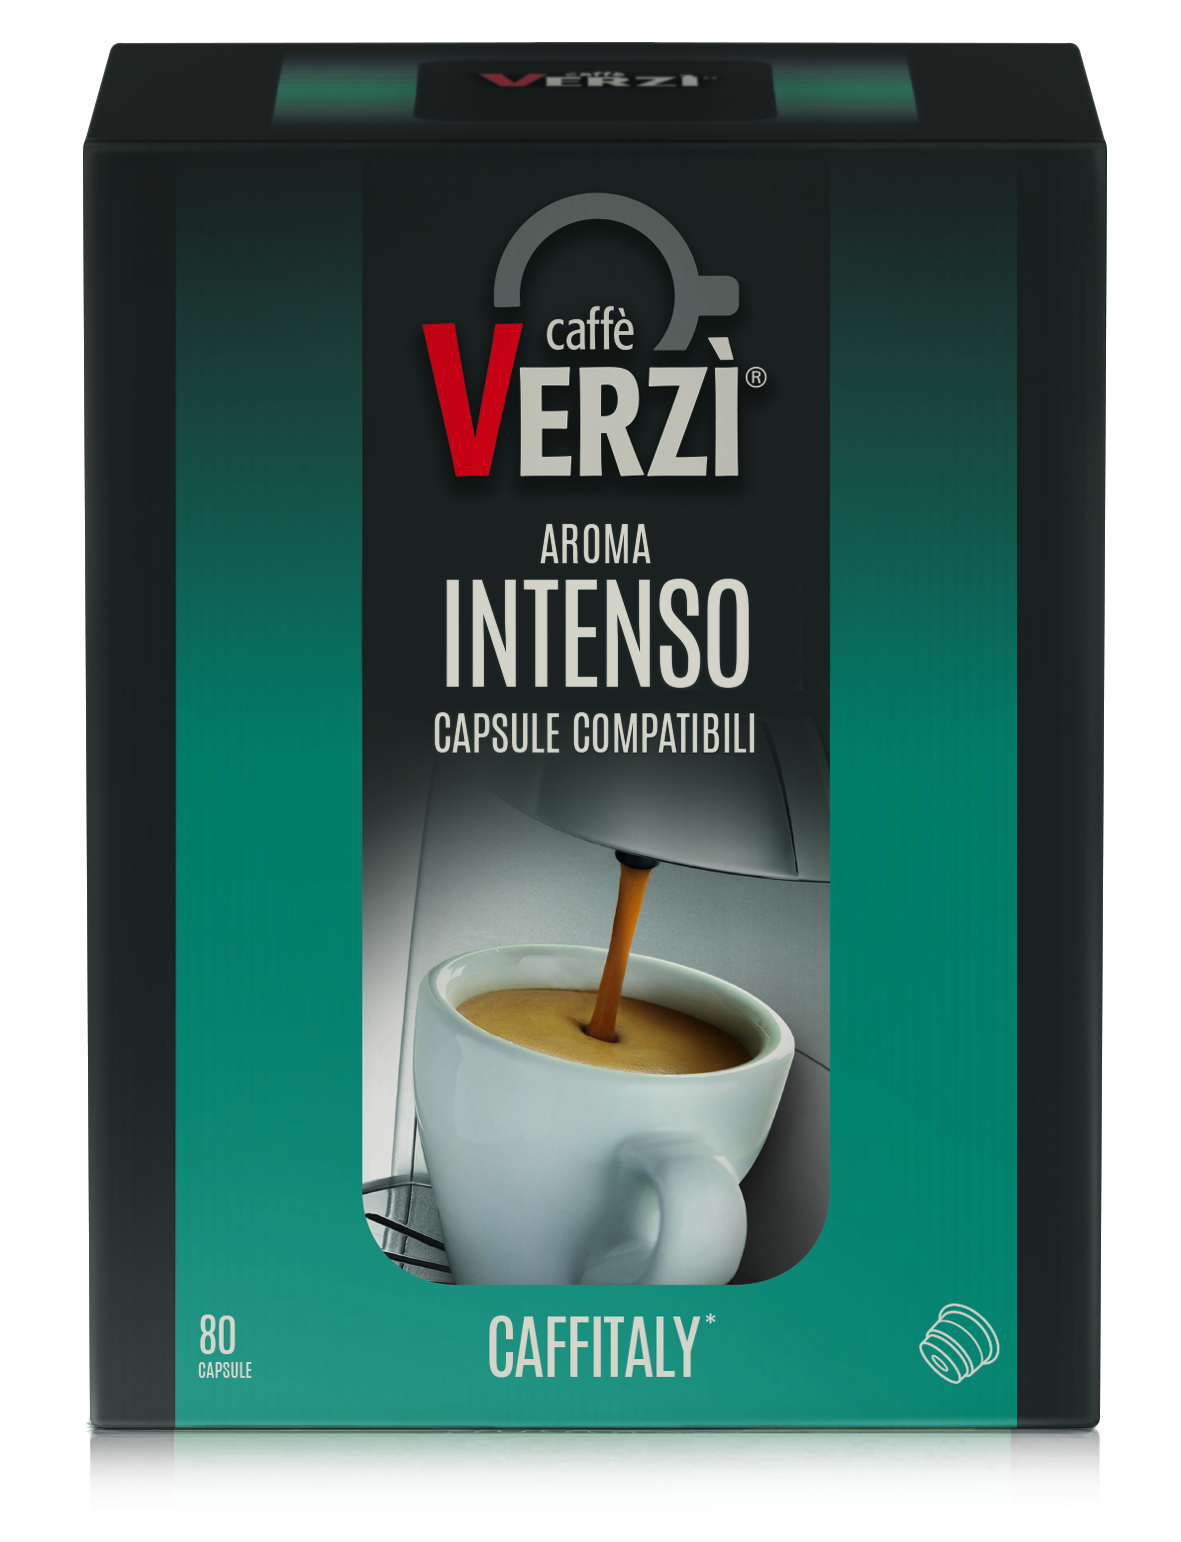 Capsule Compatibili Caffitaly - Aroma Intenso - Verzì Caffè